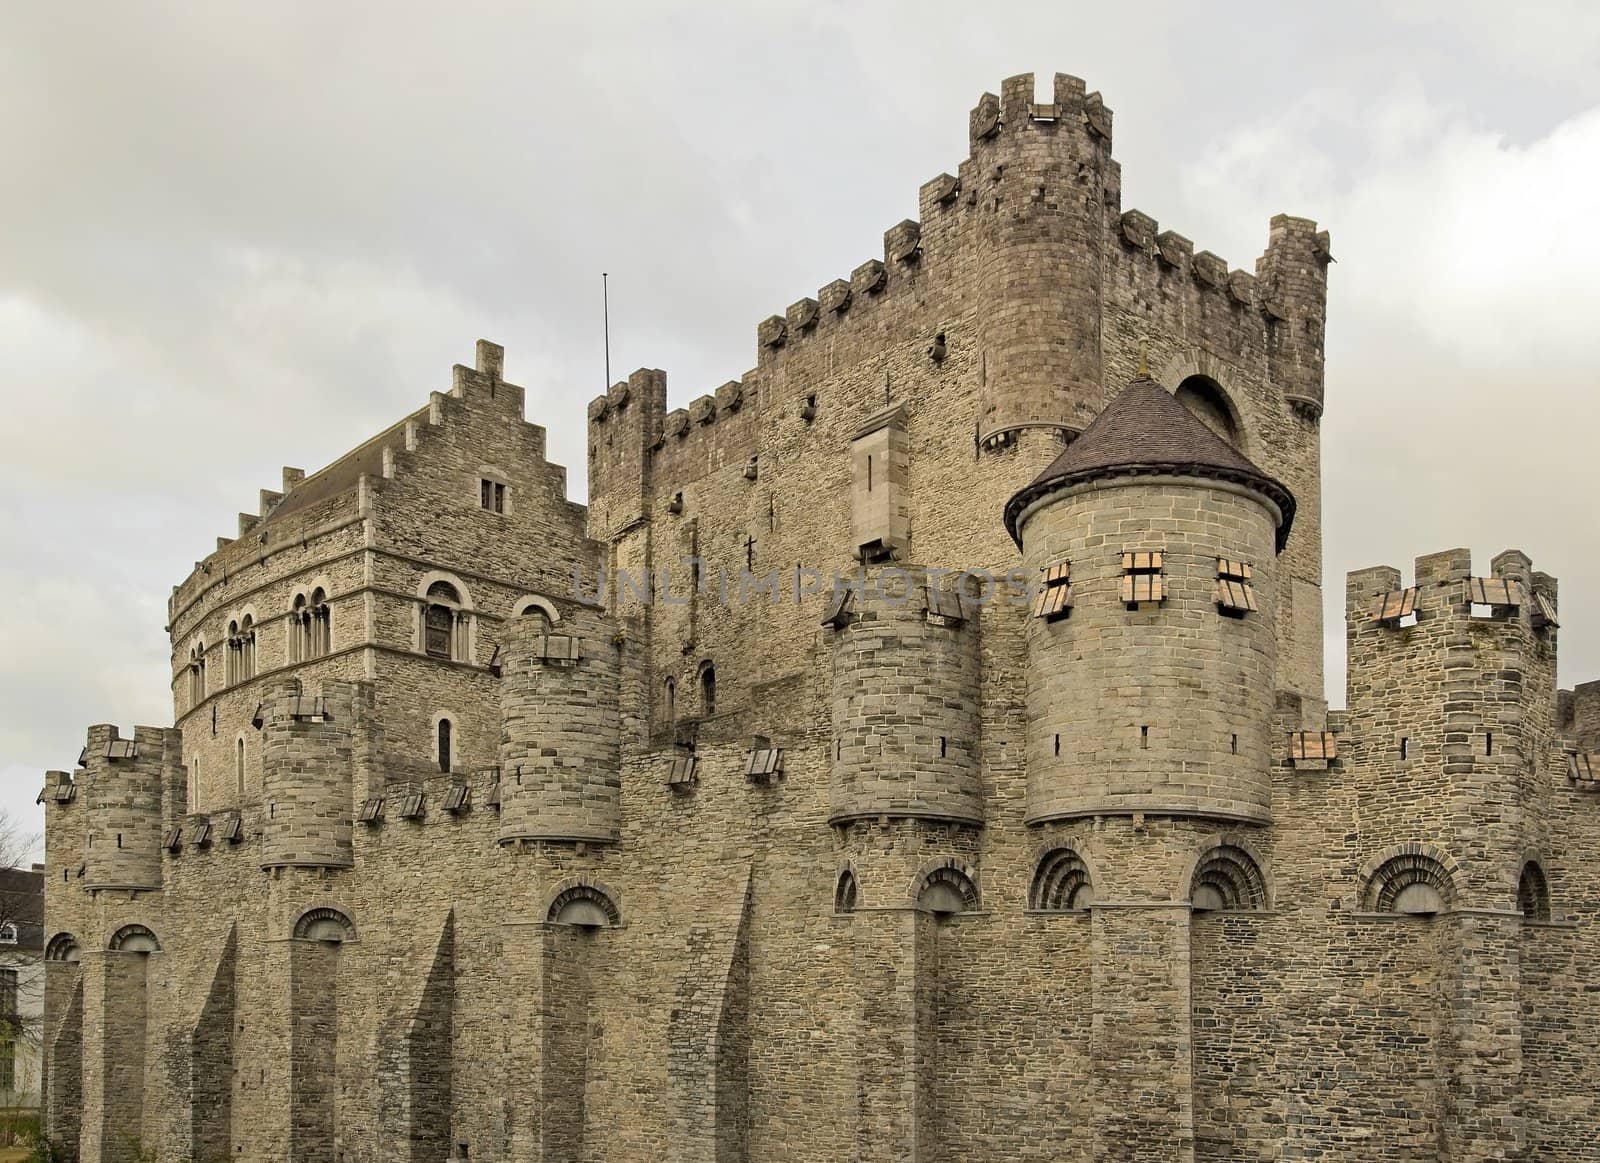 Castle of the Counts 1180  Gent by neko92vl